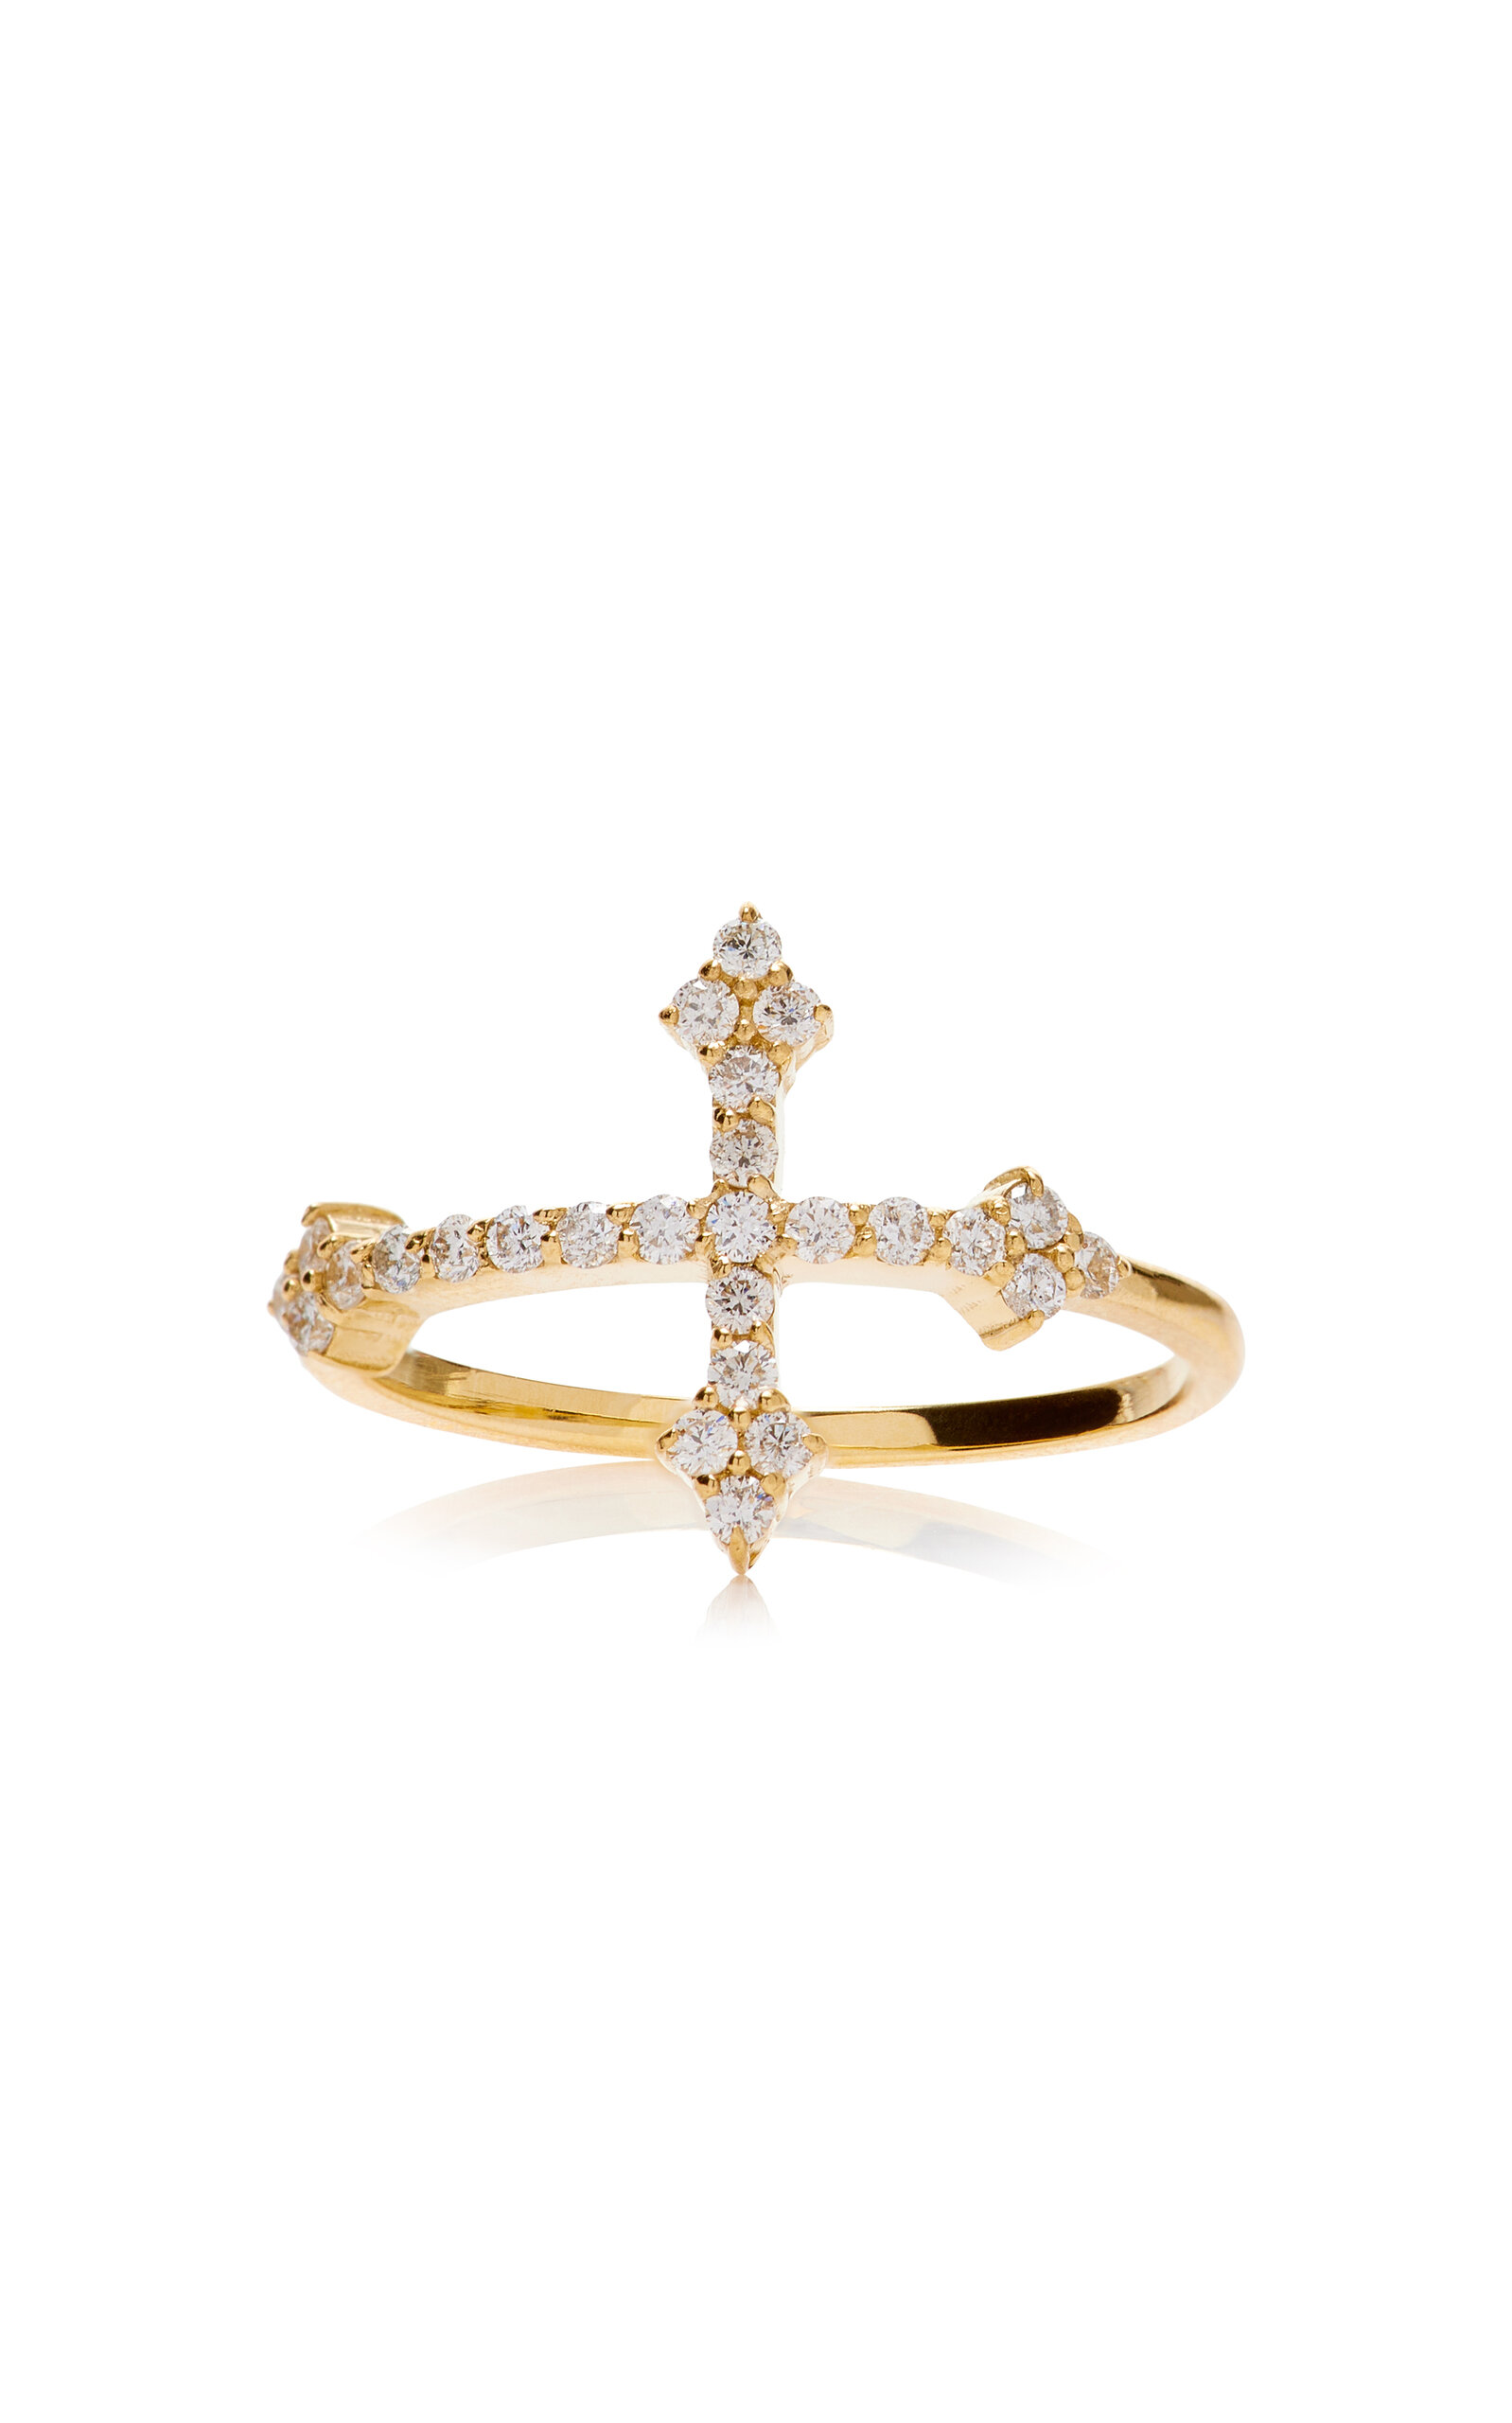 Dru Cross Your Fingers 14k Yellow Gold Diamond Ring